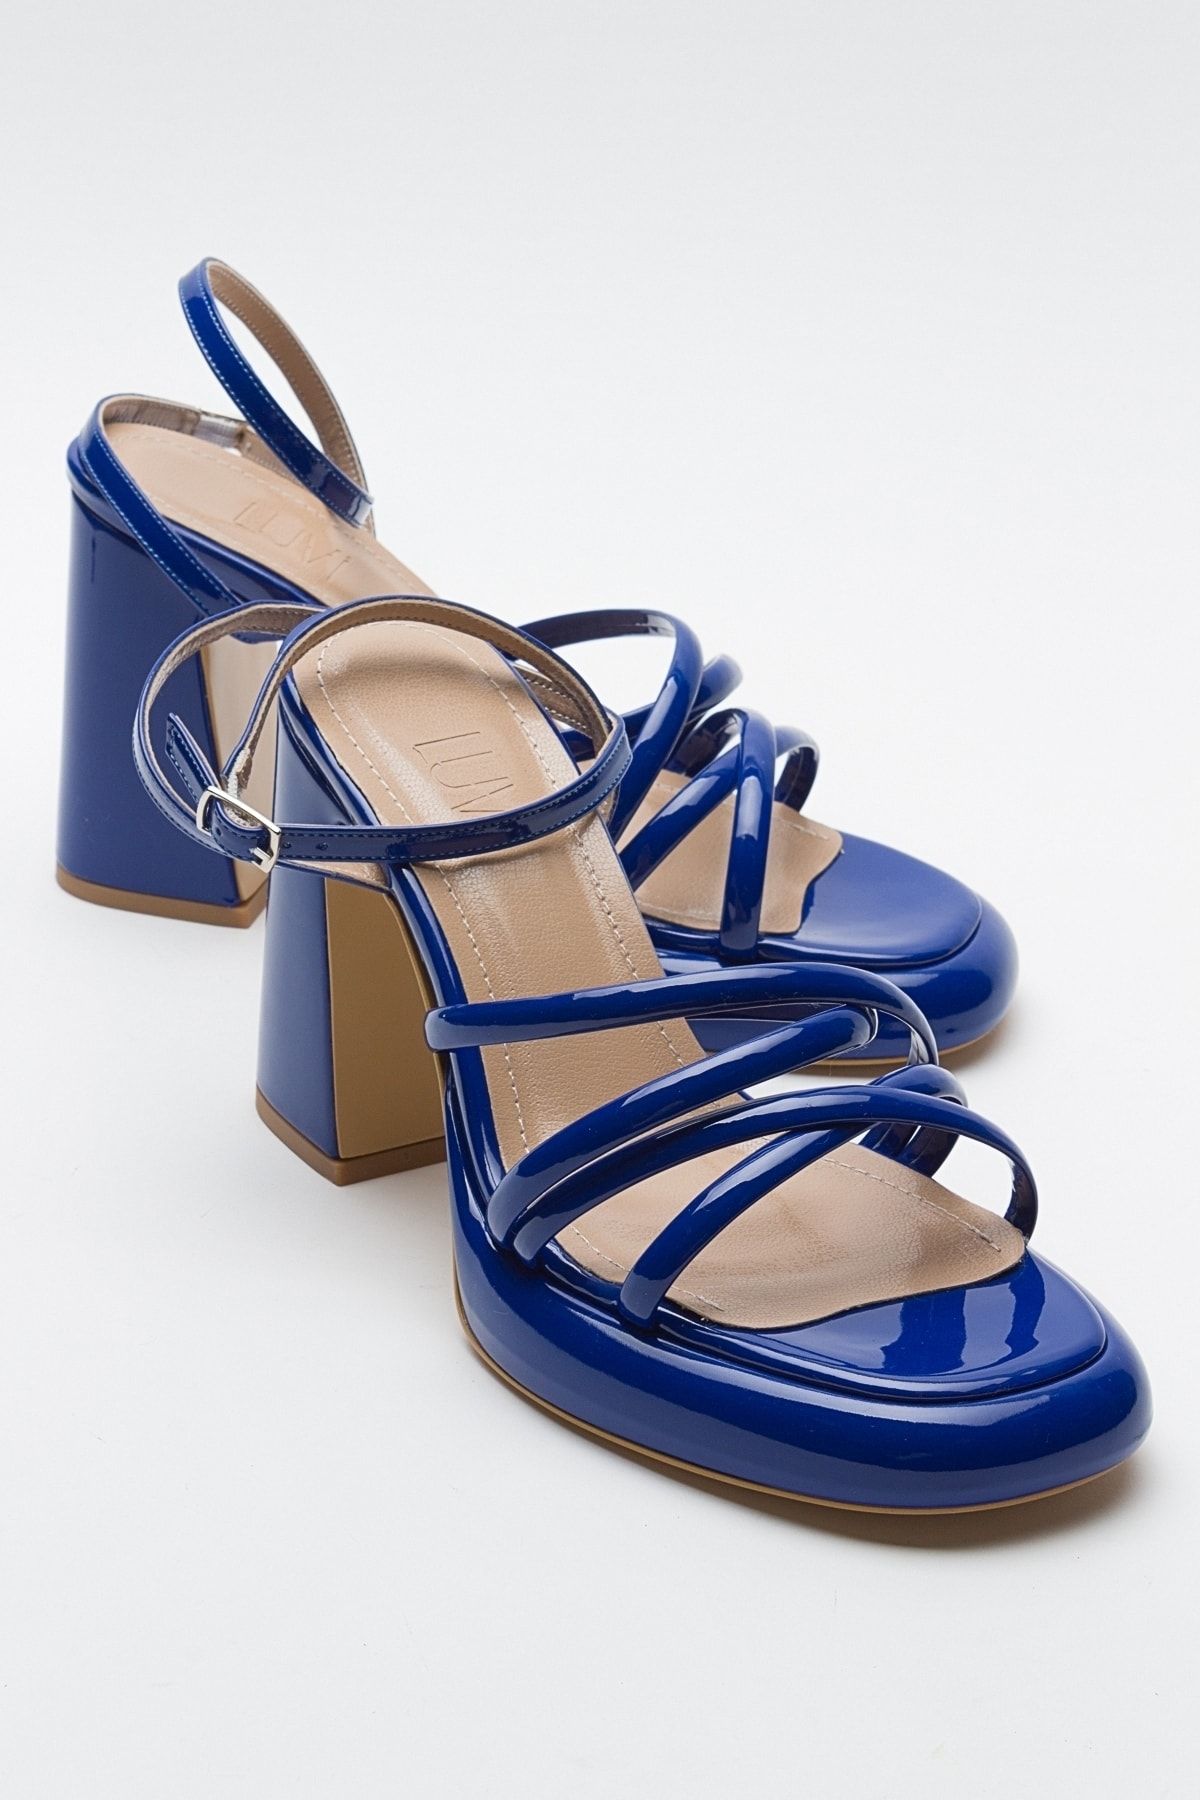 luvishoes OPPE Sax Mavi Rugan Kadın Topuklu Ayakkabı